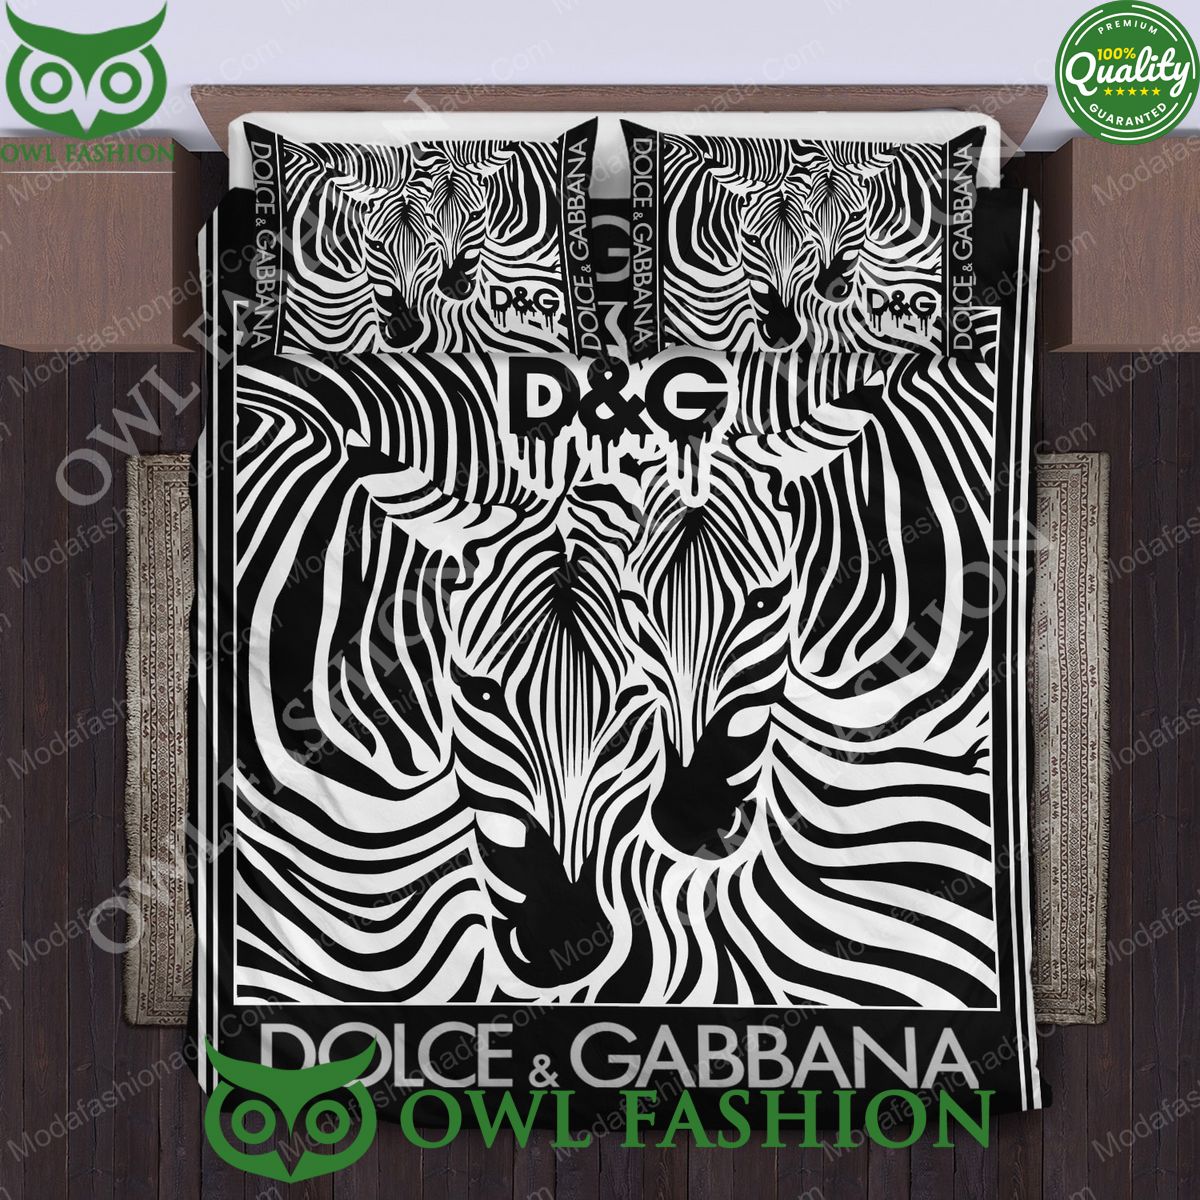 horse dolce and gabbana zebra bedding sets 1 s8ZQC.jpg